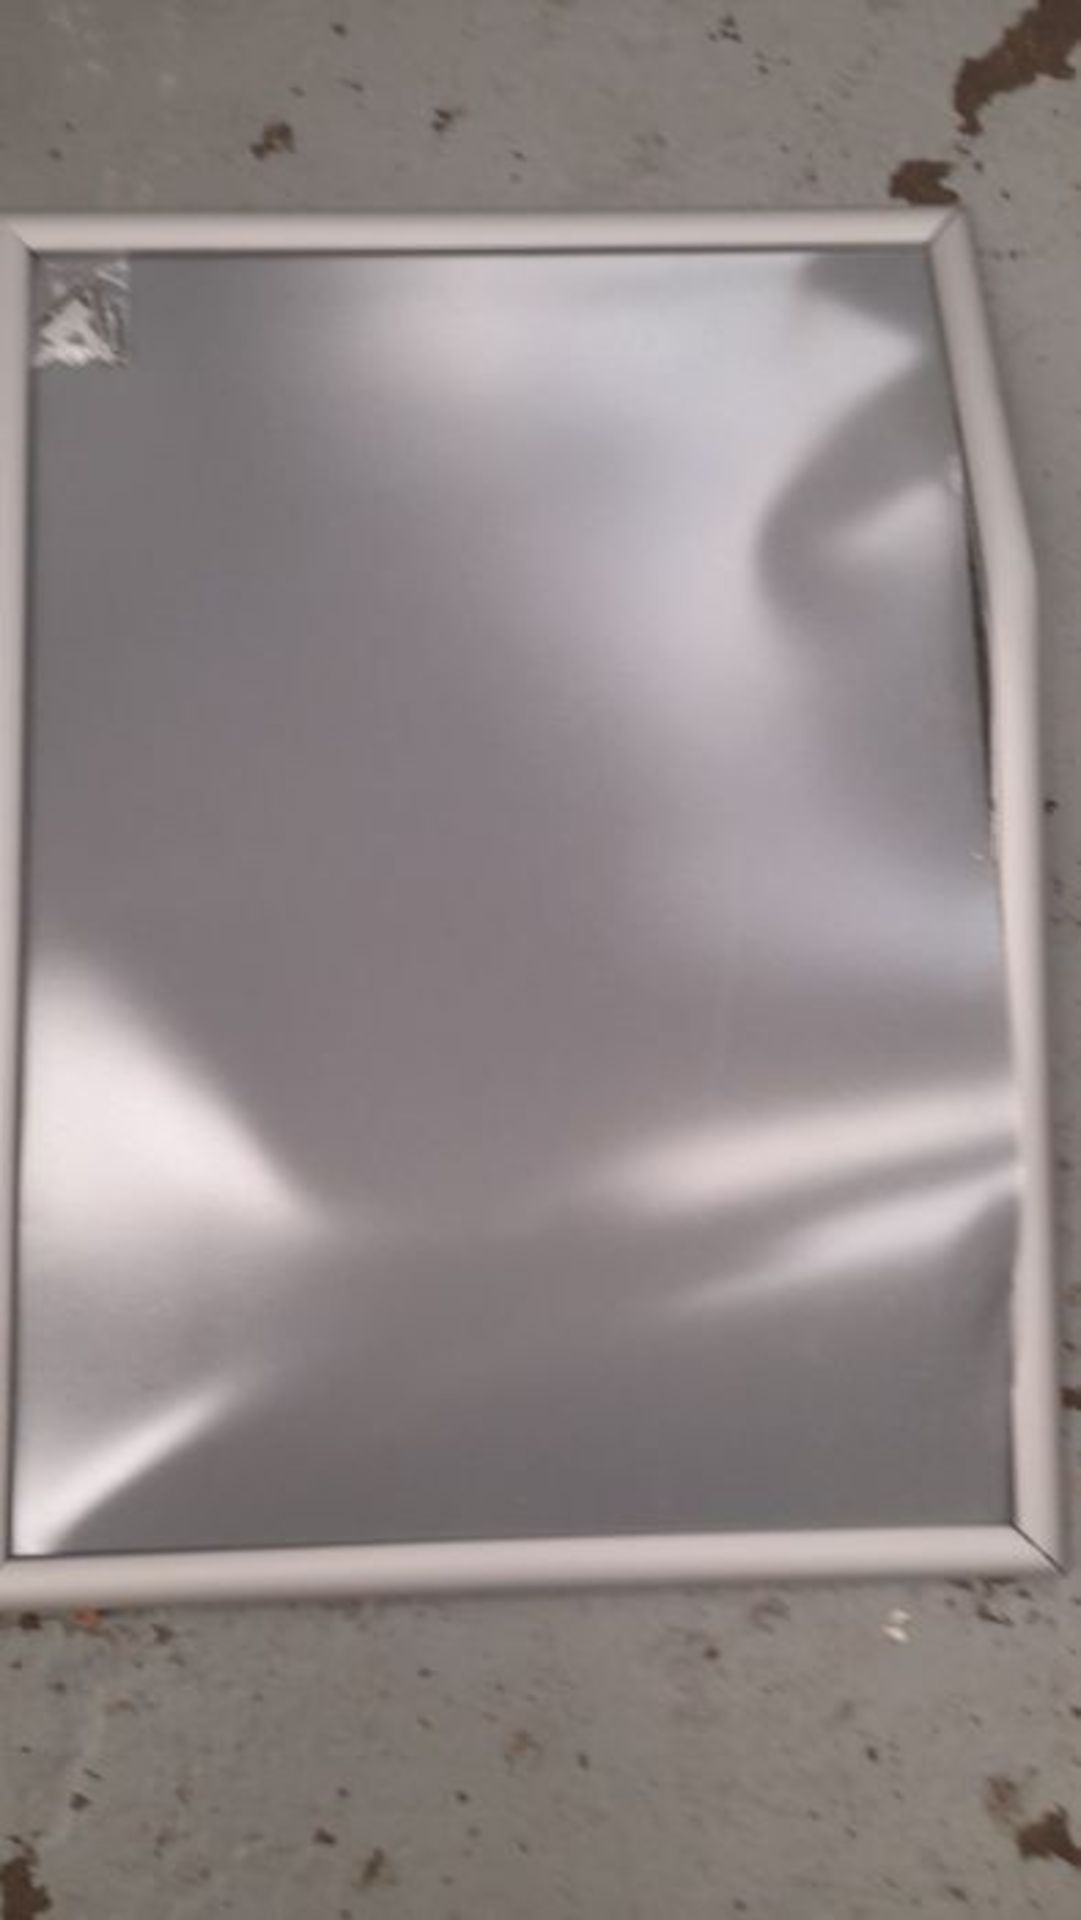 Opus 2 Snap Frame B2 (50 x 70 cm), 25 mm Aluminium Anodised Construction and Anti-Glar - Image 2 of 2